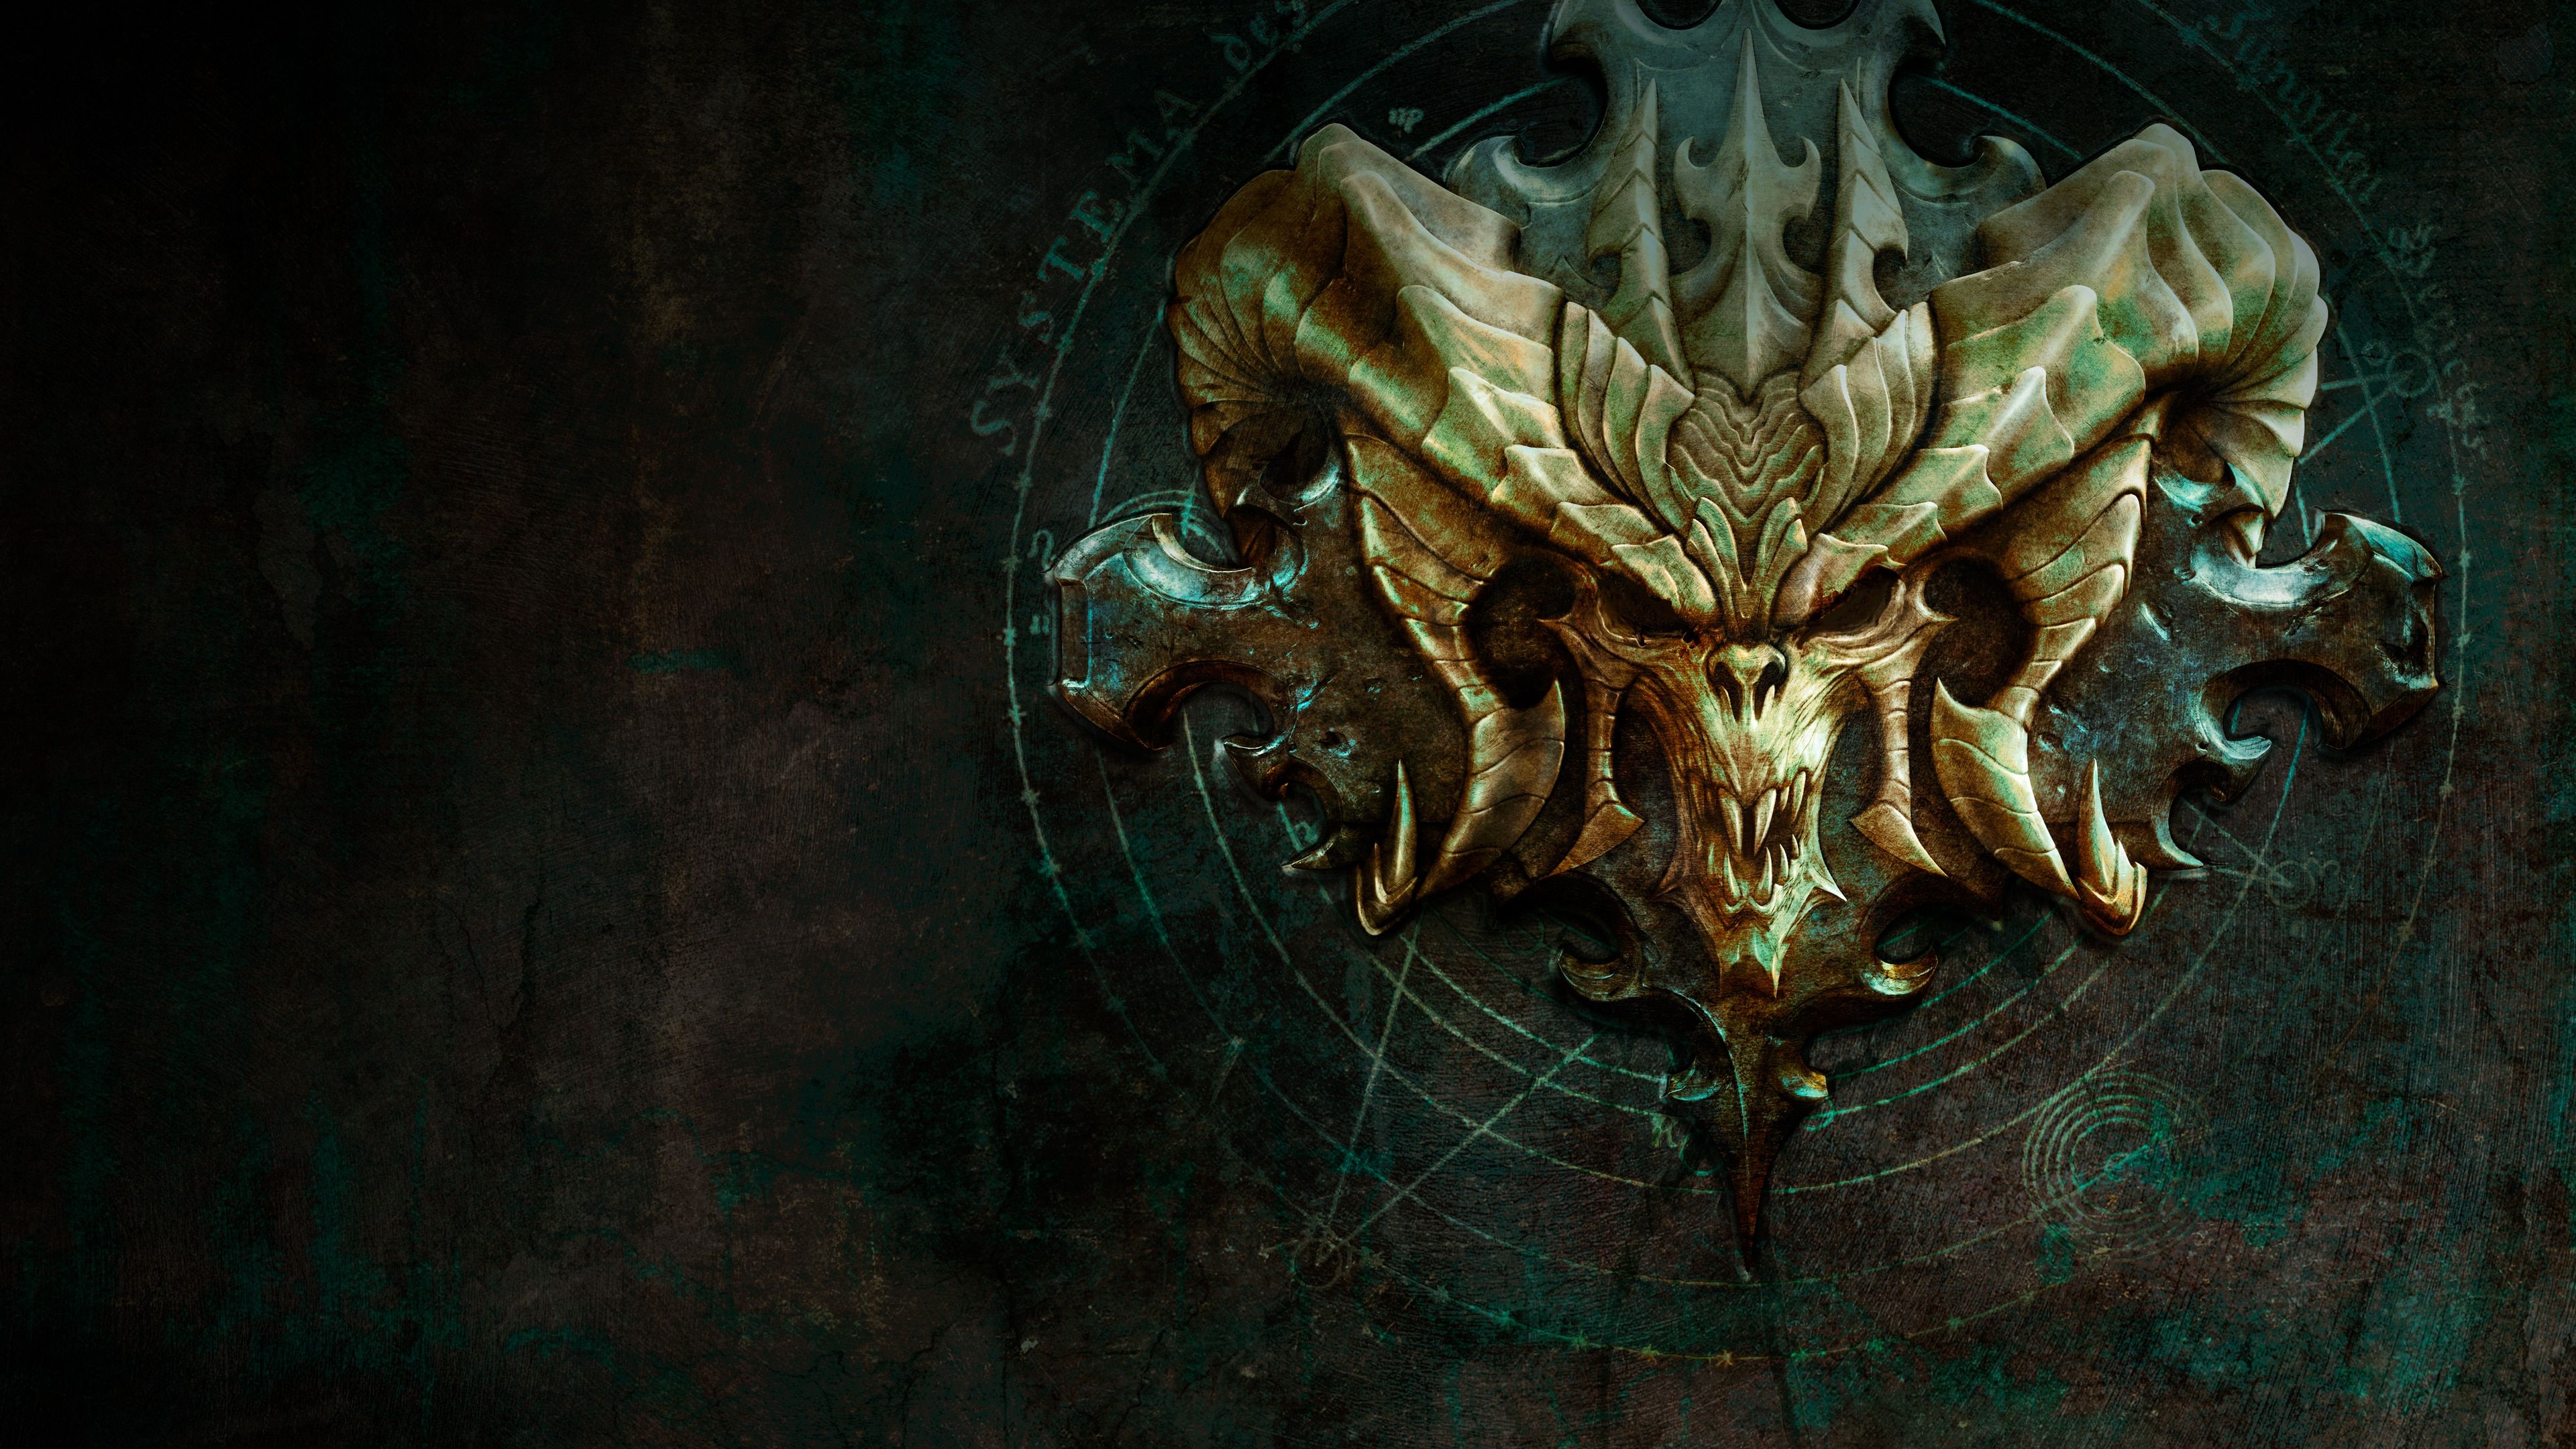 Diablo III: Reaper of Souls cover image